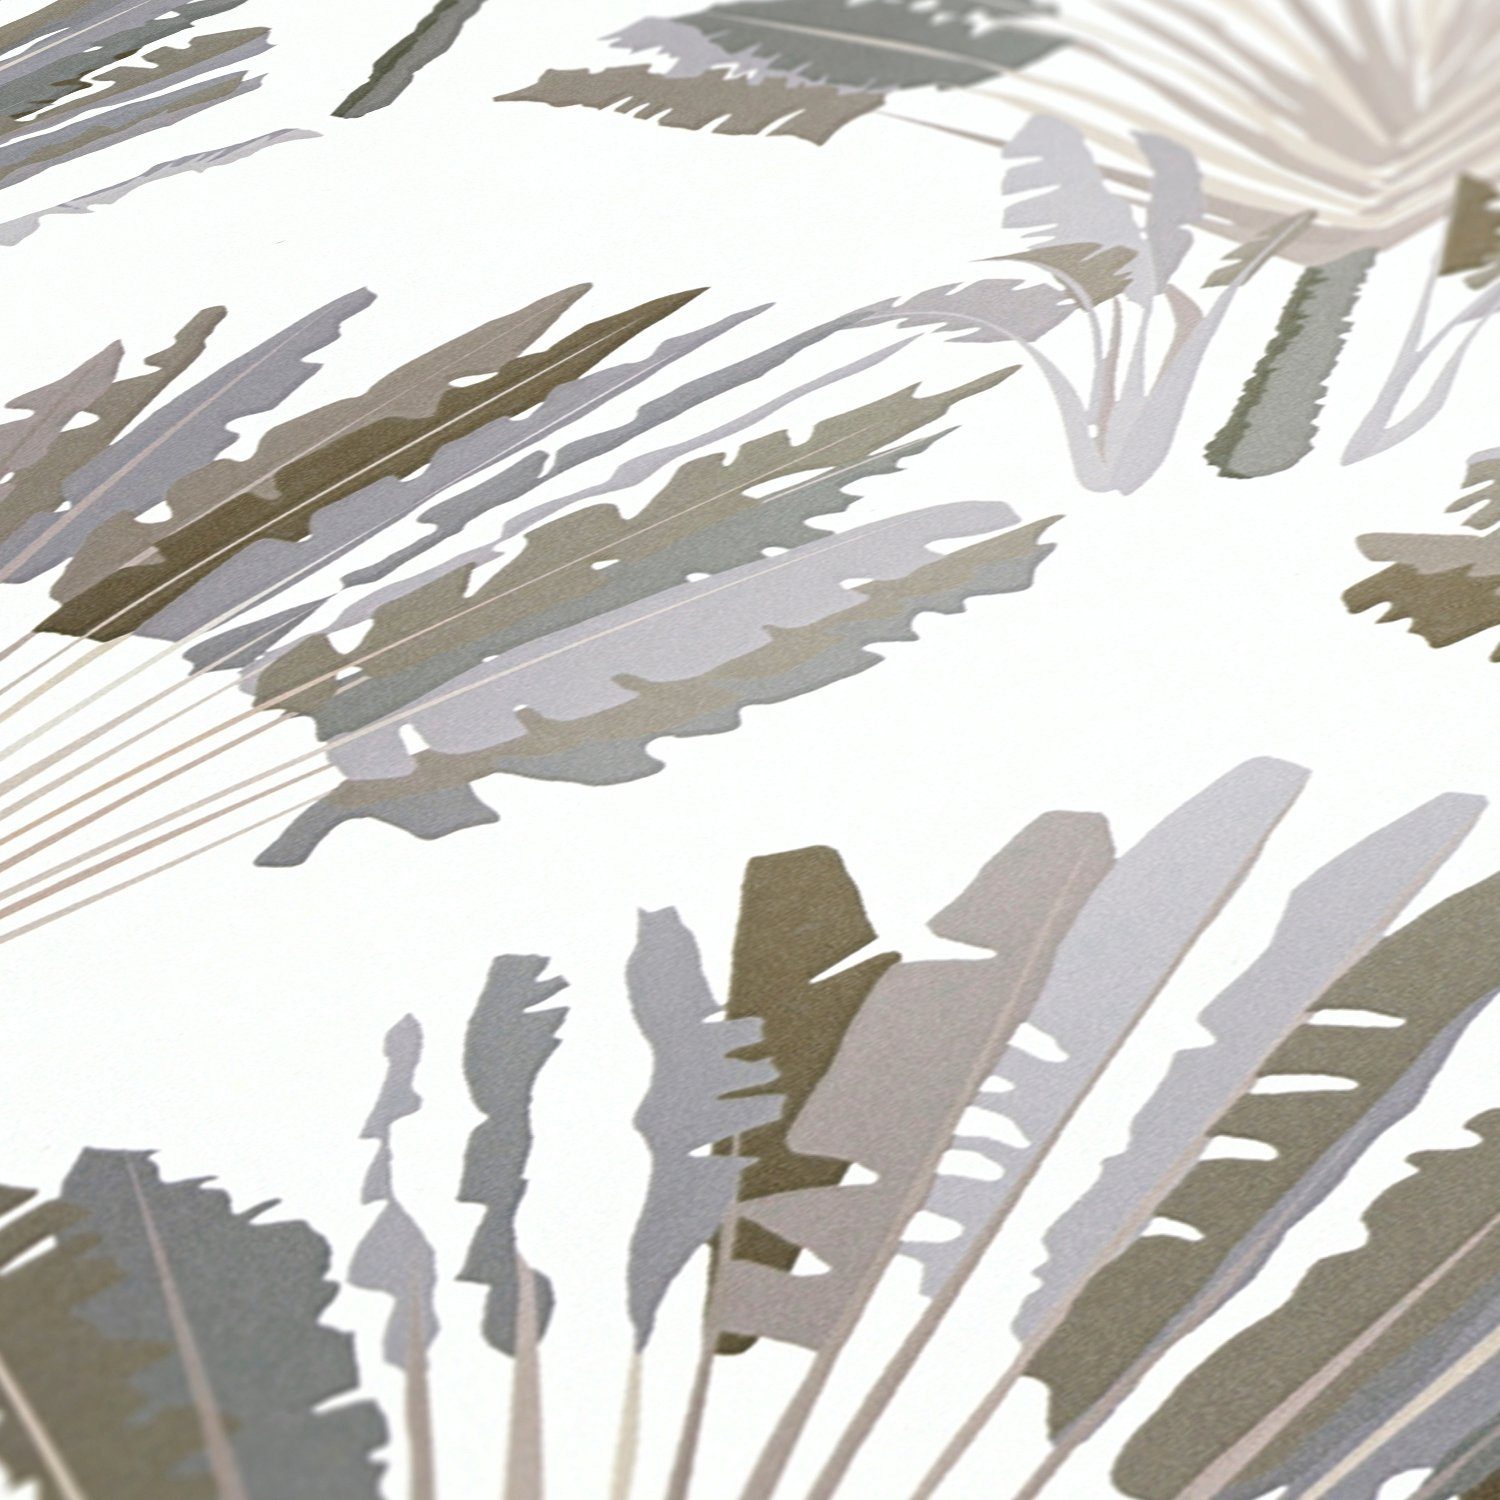 Architects Jungle glatt, botanisch, Tapete Paper Chic, Federn Palmentapete Création Dschungel Vliestapete tropisch, A.S. grau/weiß/braun floral,